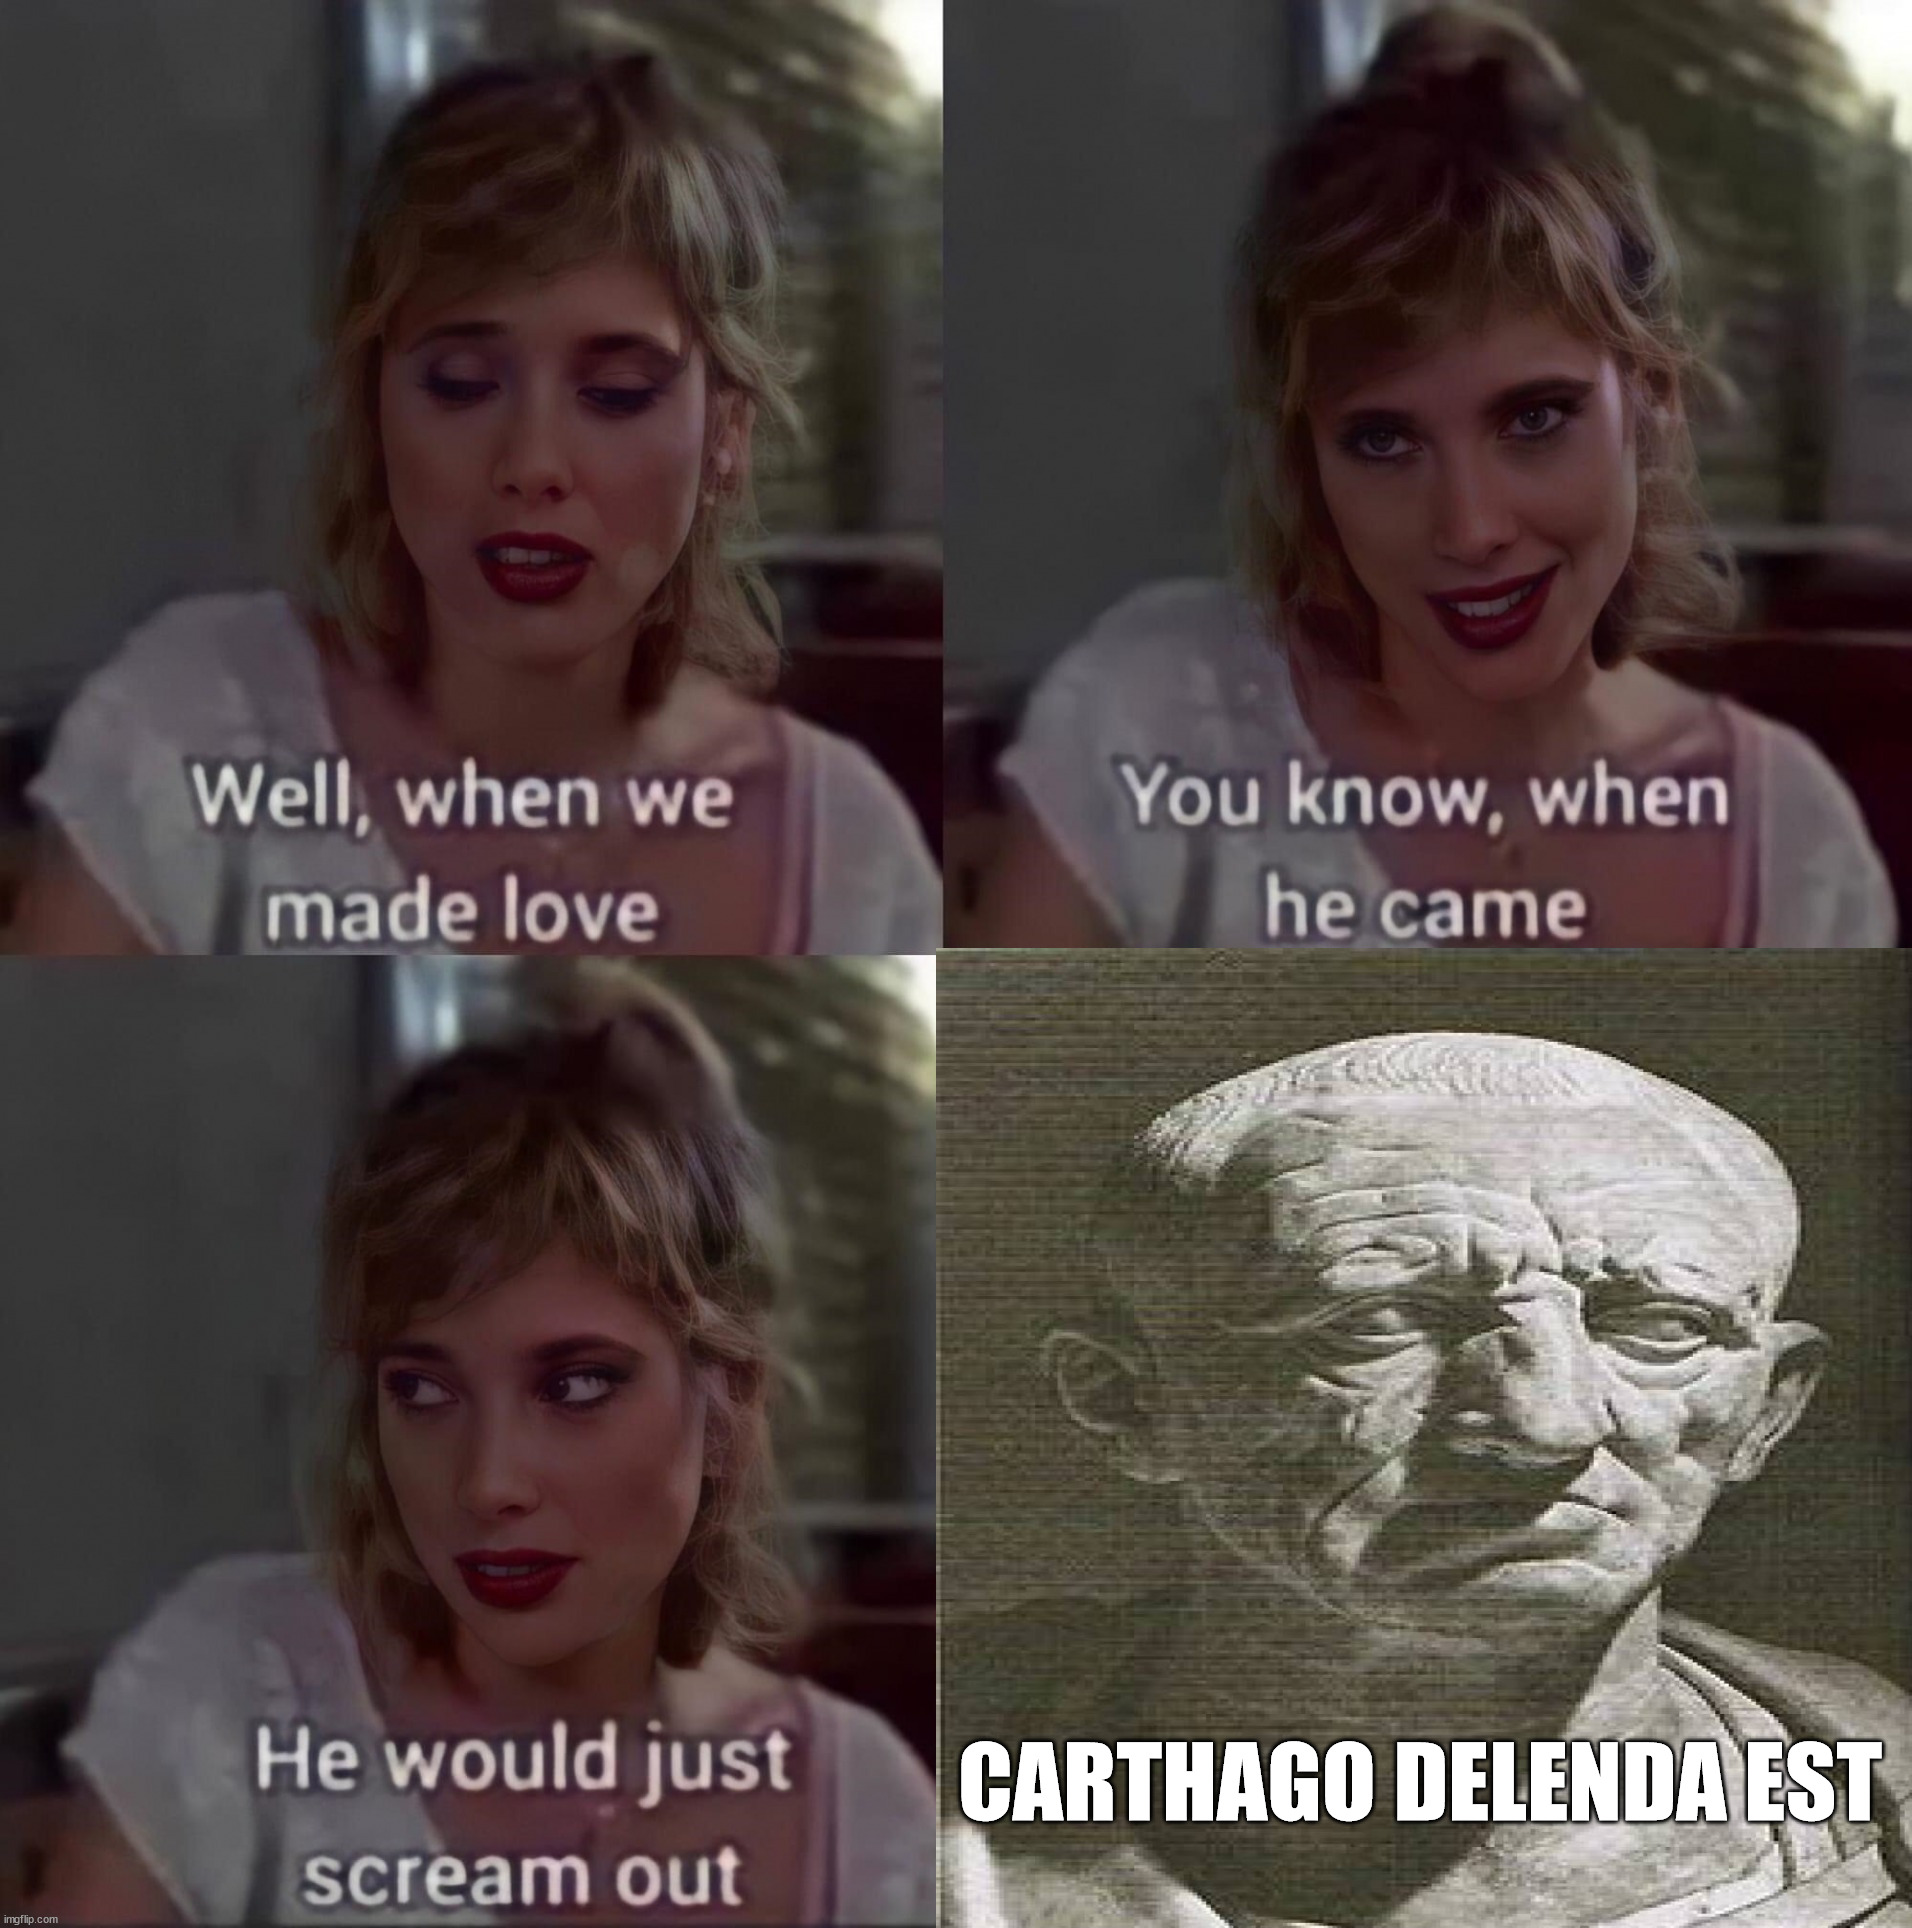  CARTHAGO DELENDA EST | image tagged in cato the elder,carthago delenda est | made w/ Imgflip meme maker